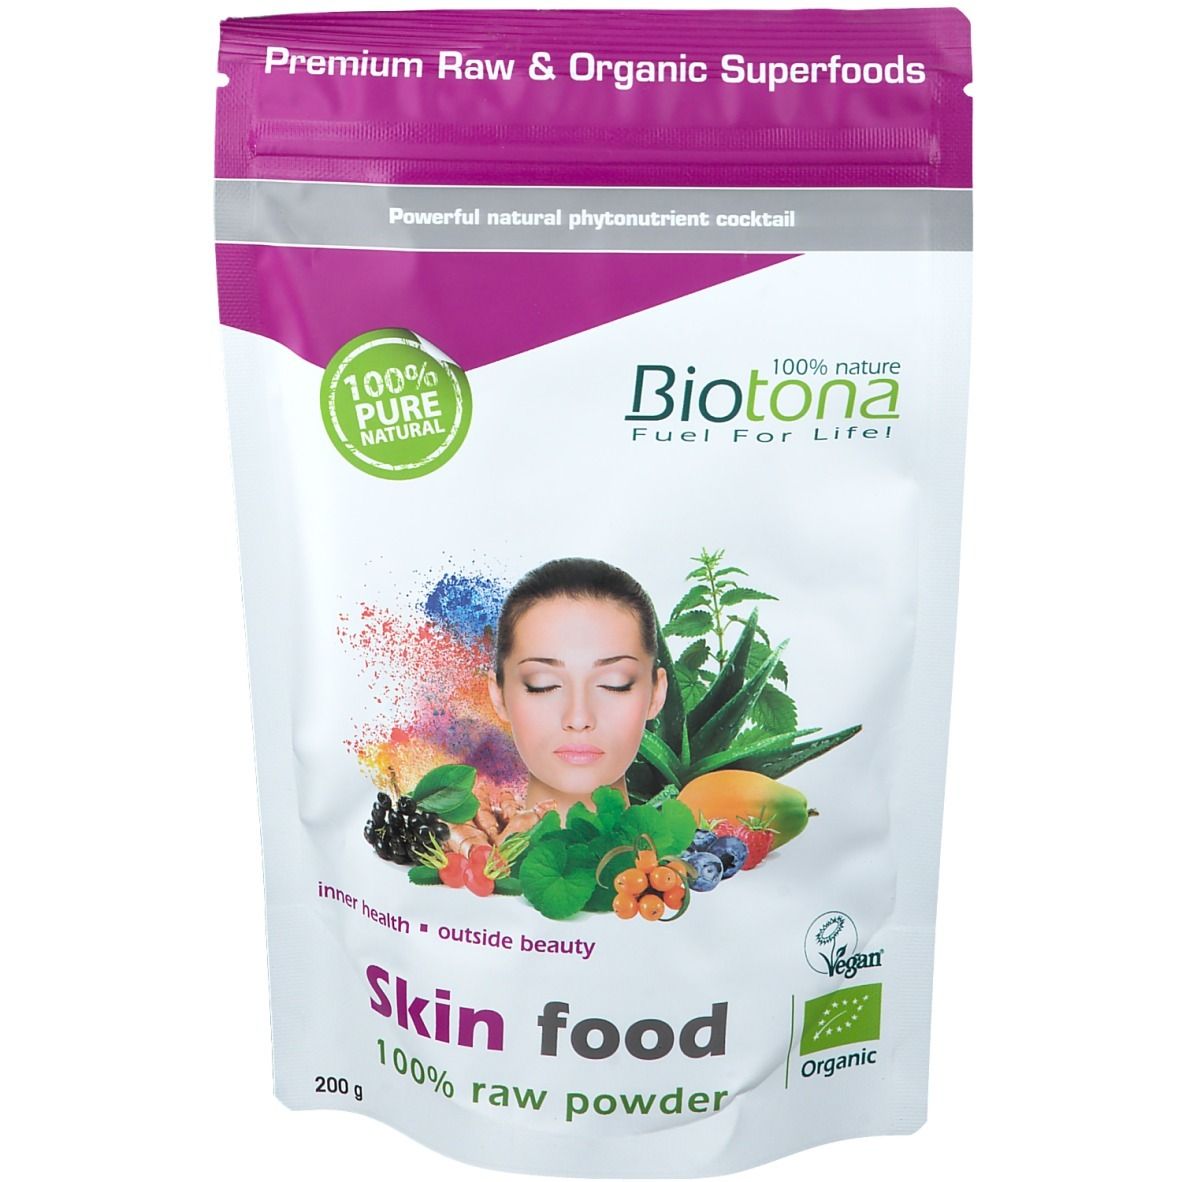 Biotona Skin Food